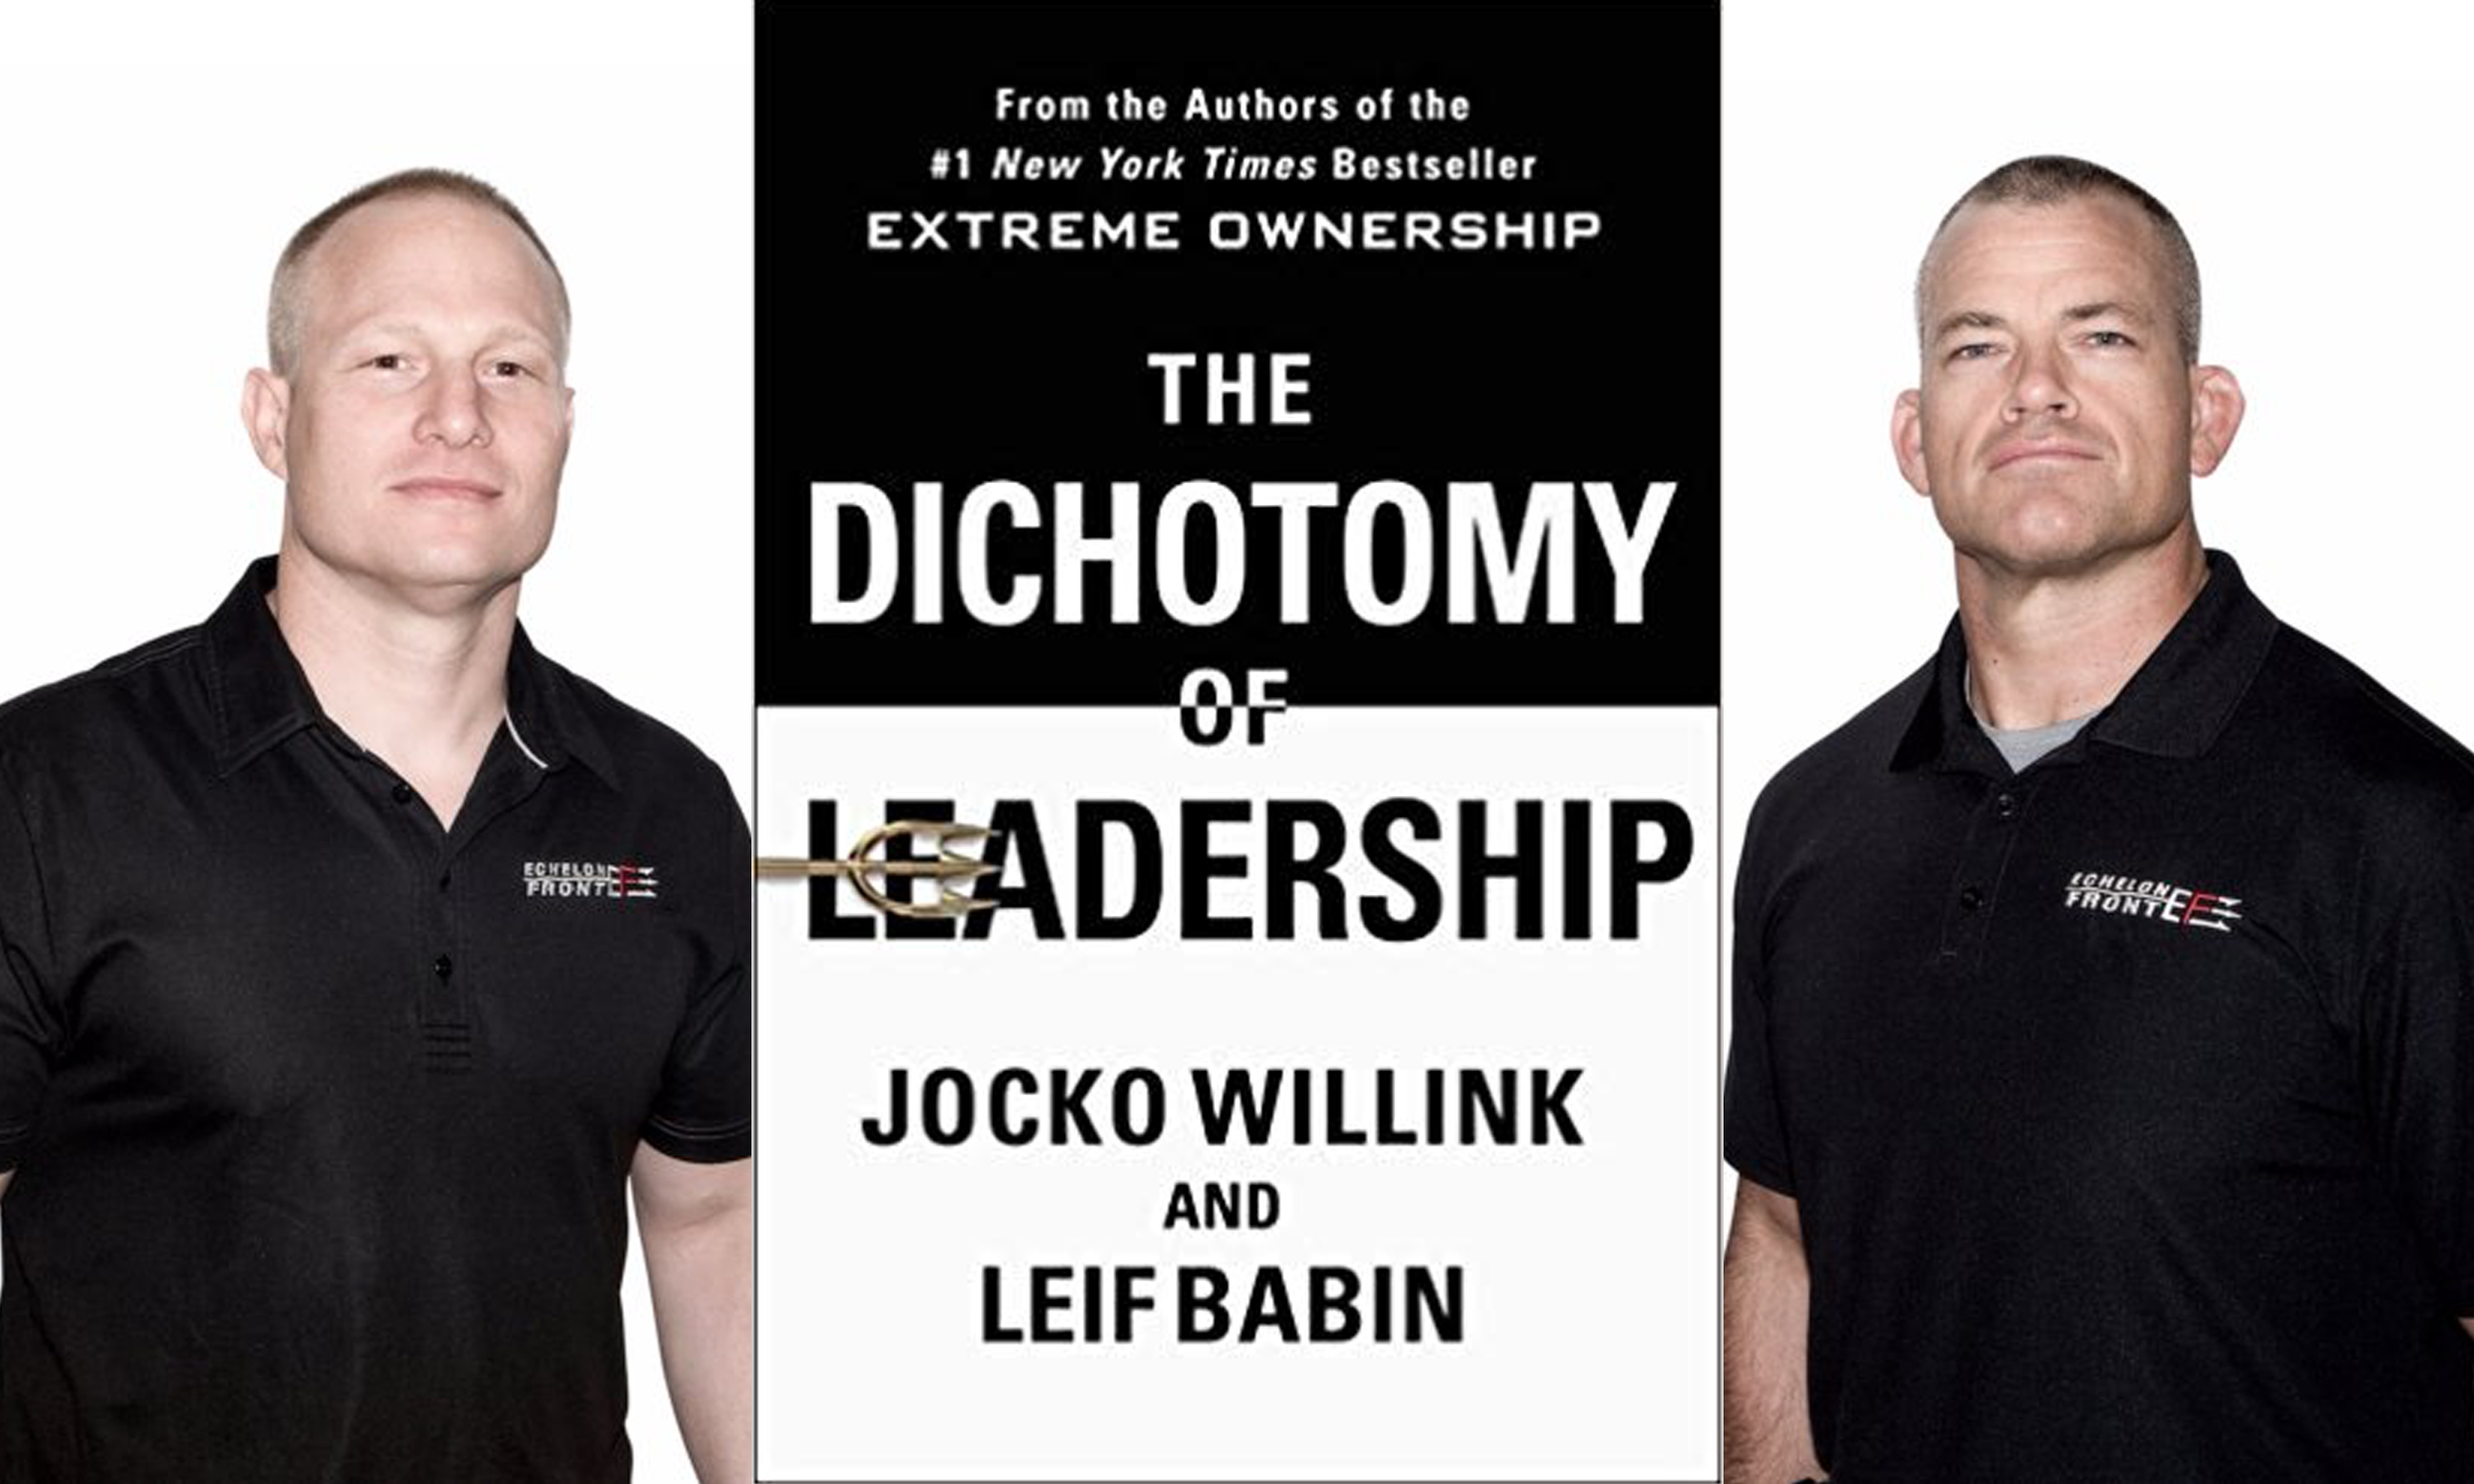 Dichotomy of Leadership